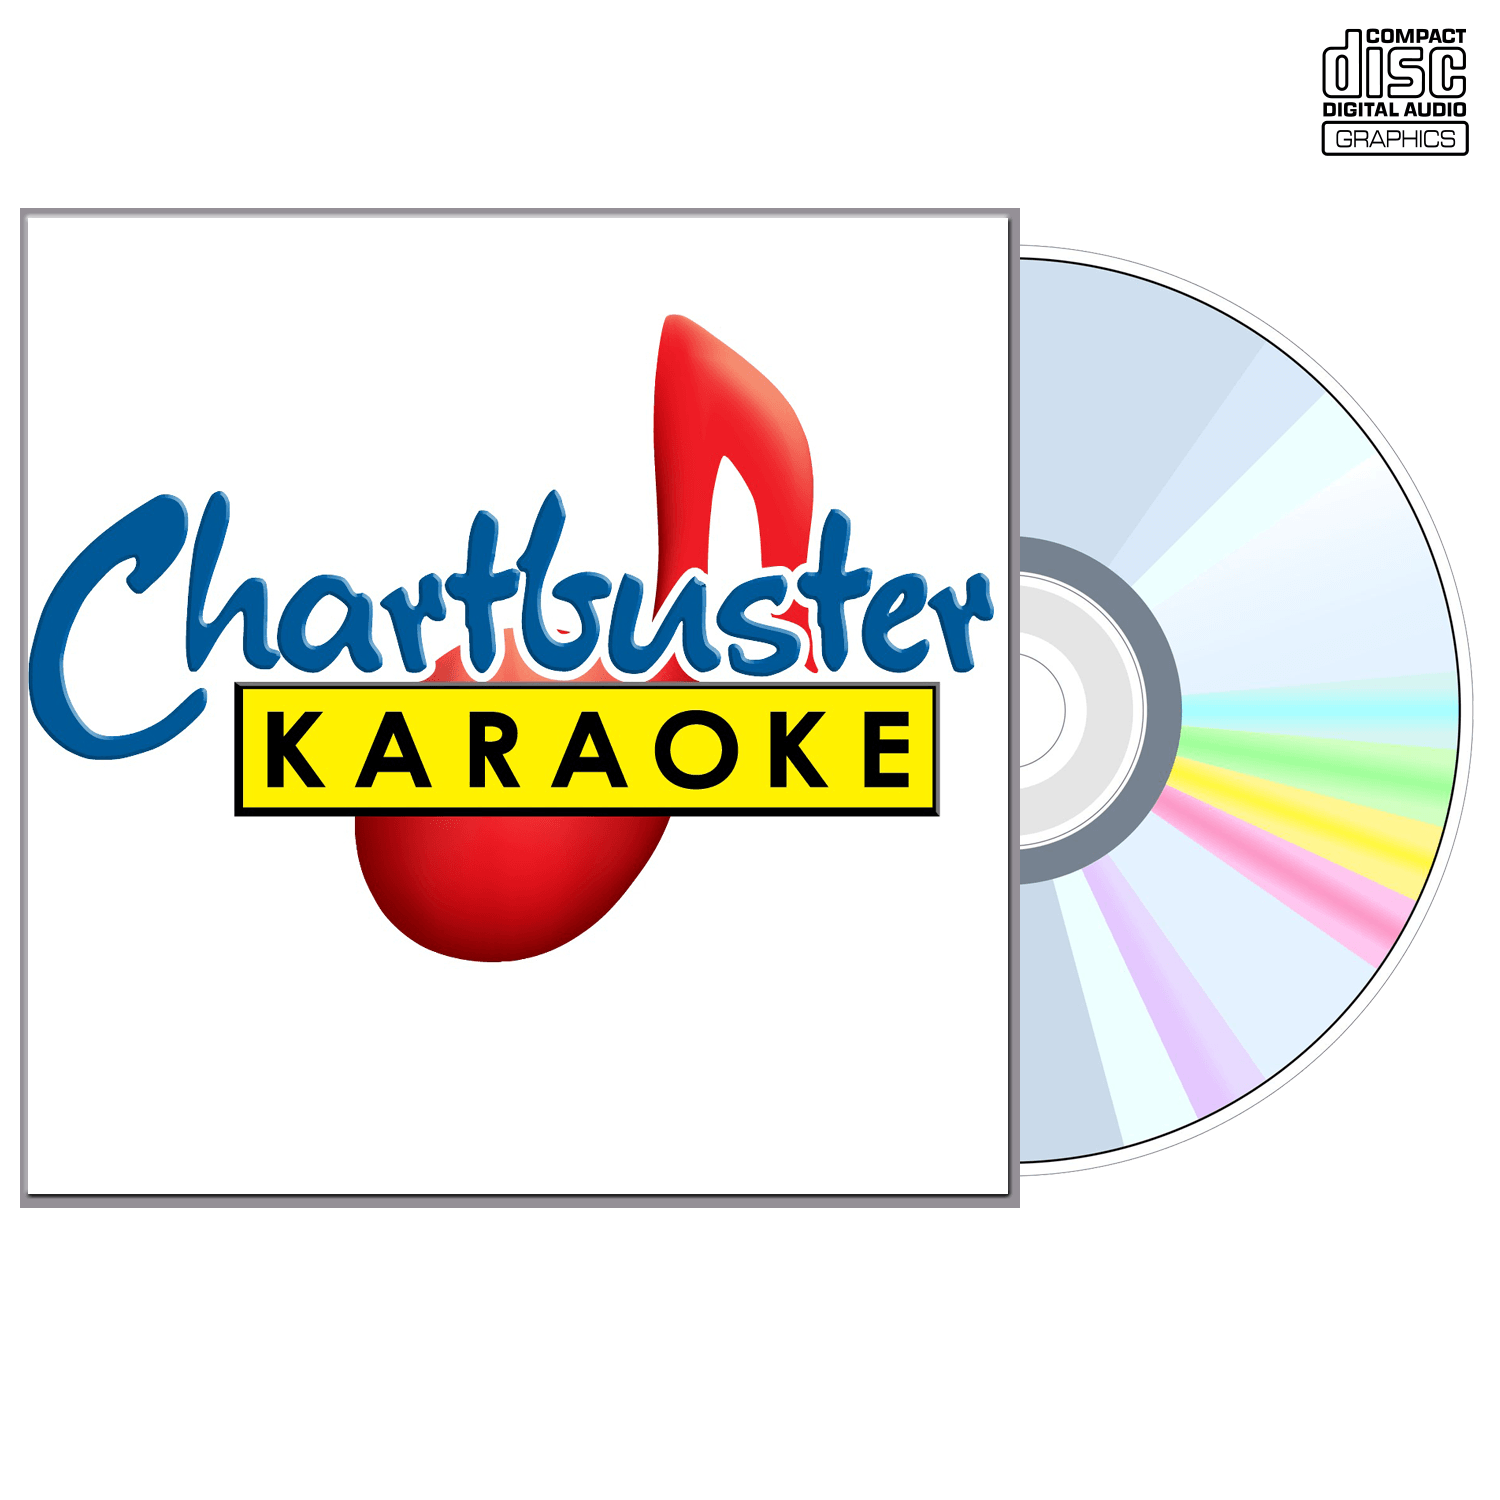 Willie Nelson Vol 2 - CD+G - Chartbuster Karaoke - Karaoke Home Entertainment